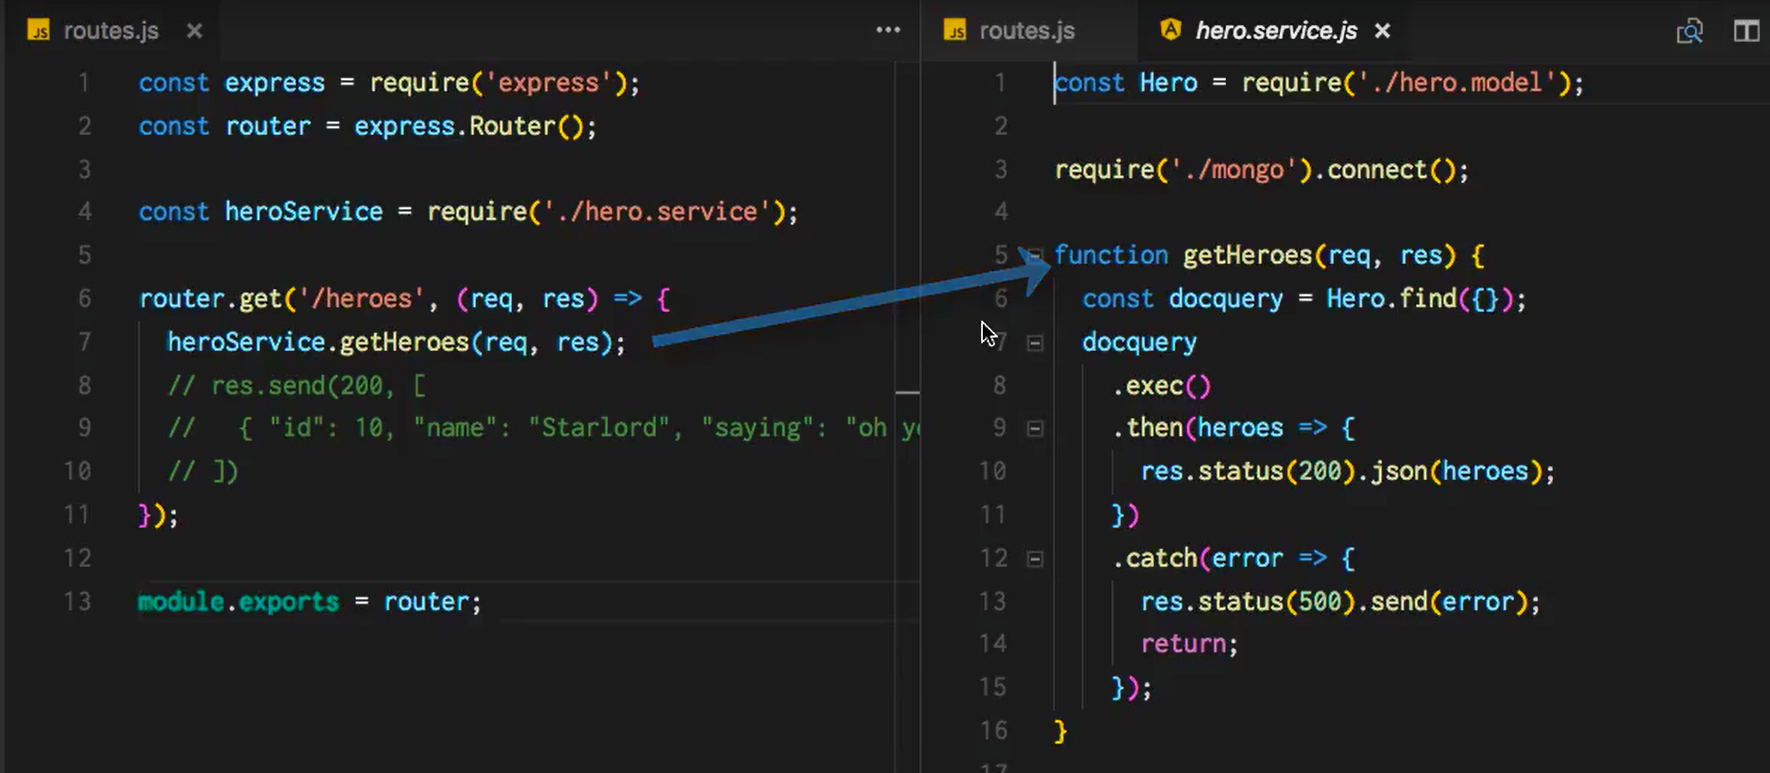 routes.js y hero.service.js en Visual Studio Code